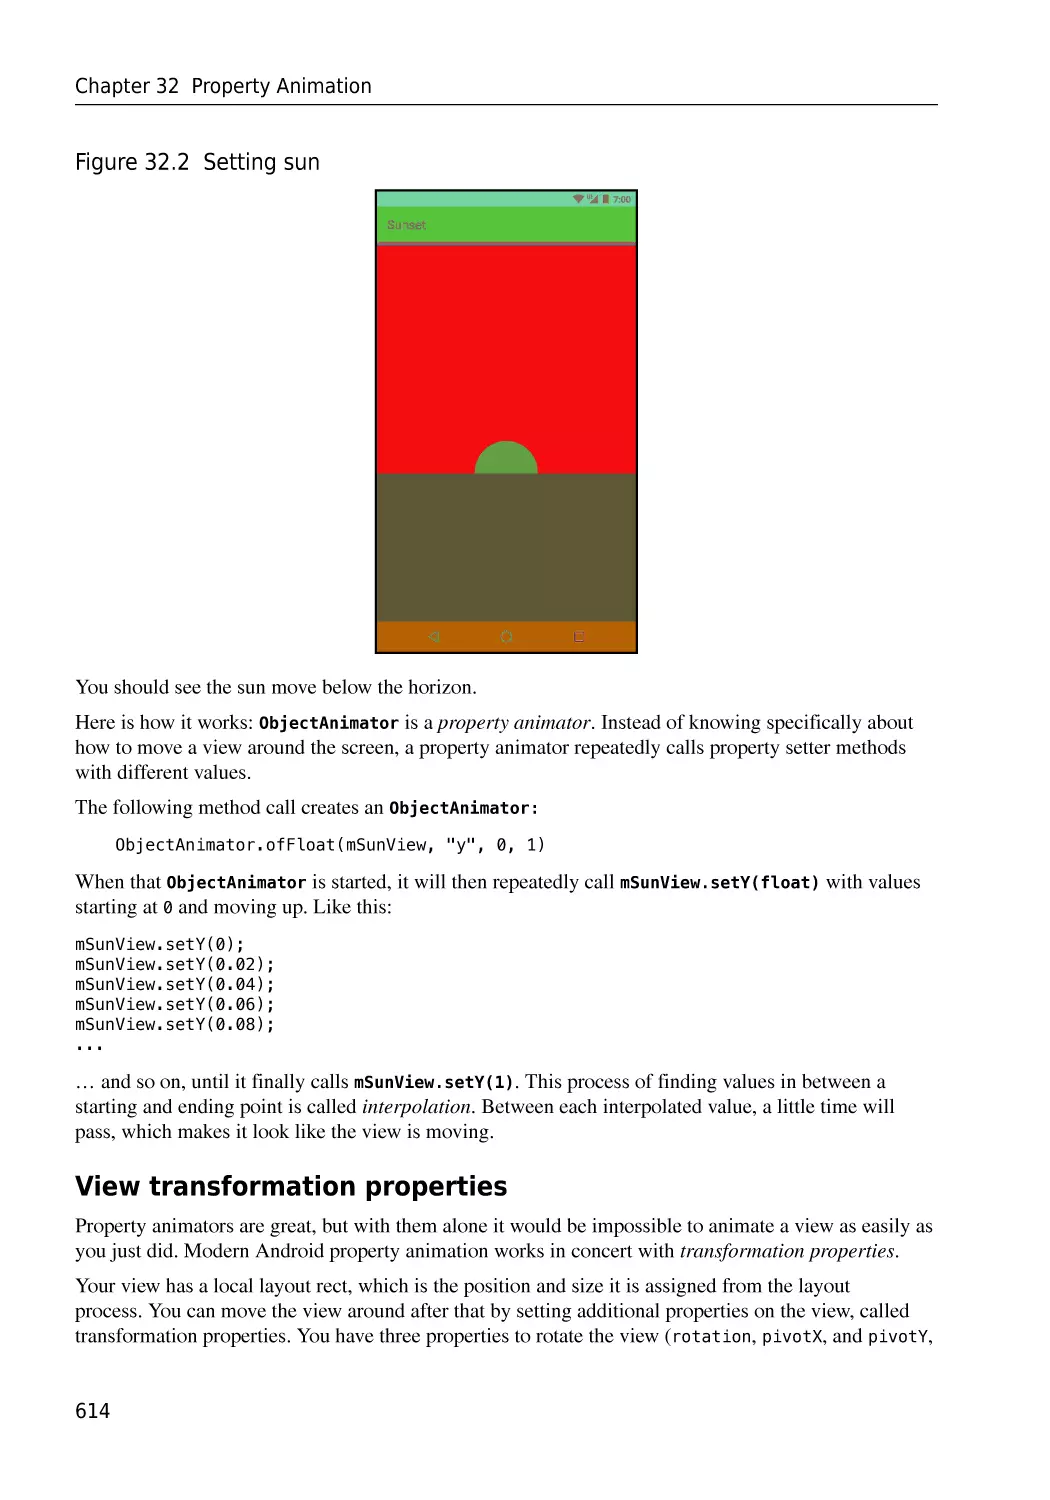 View transformation properties